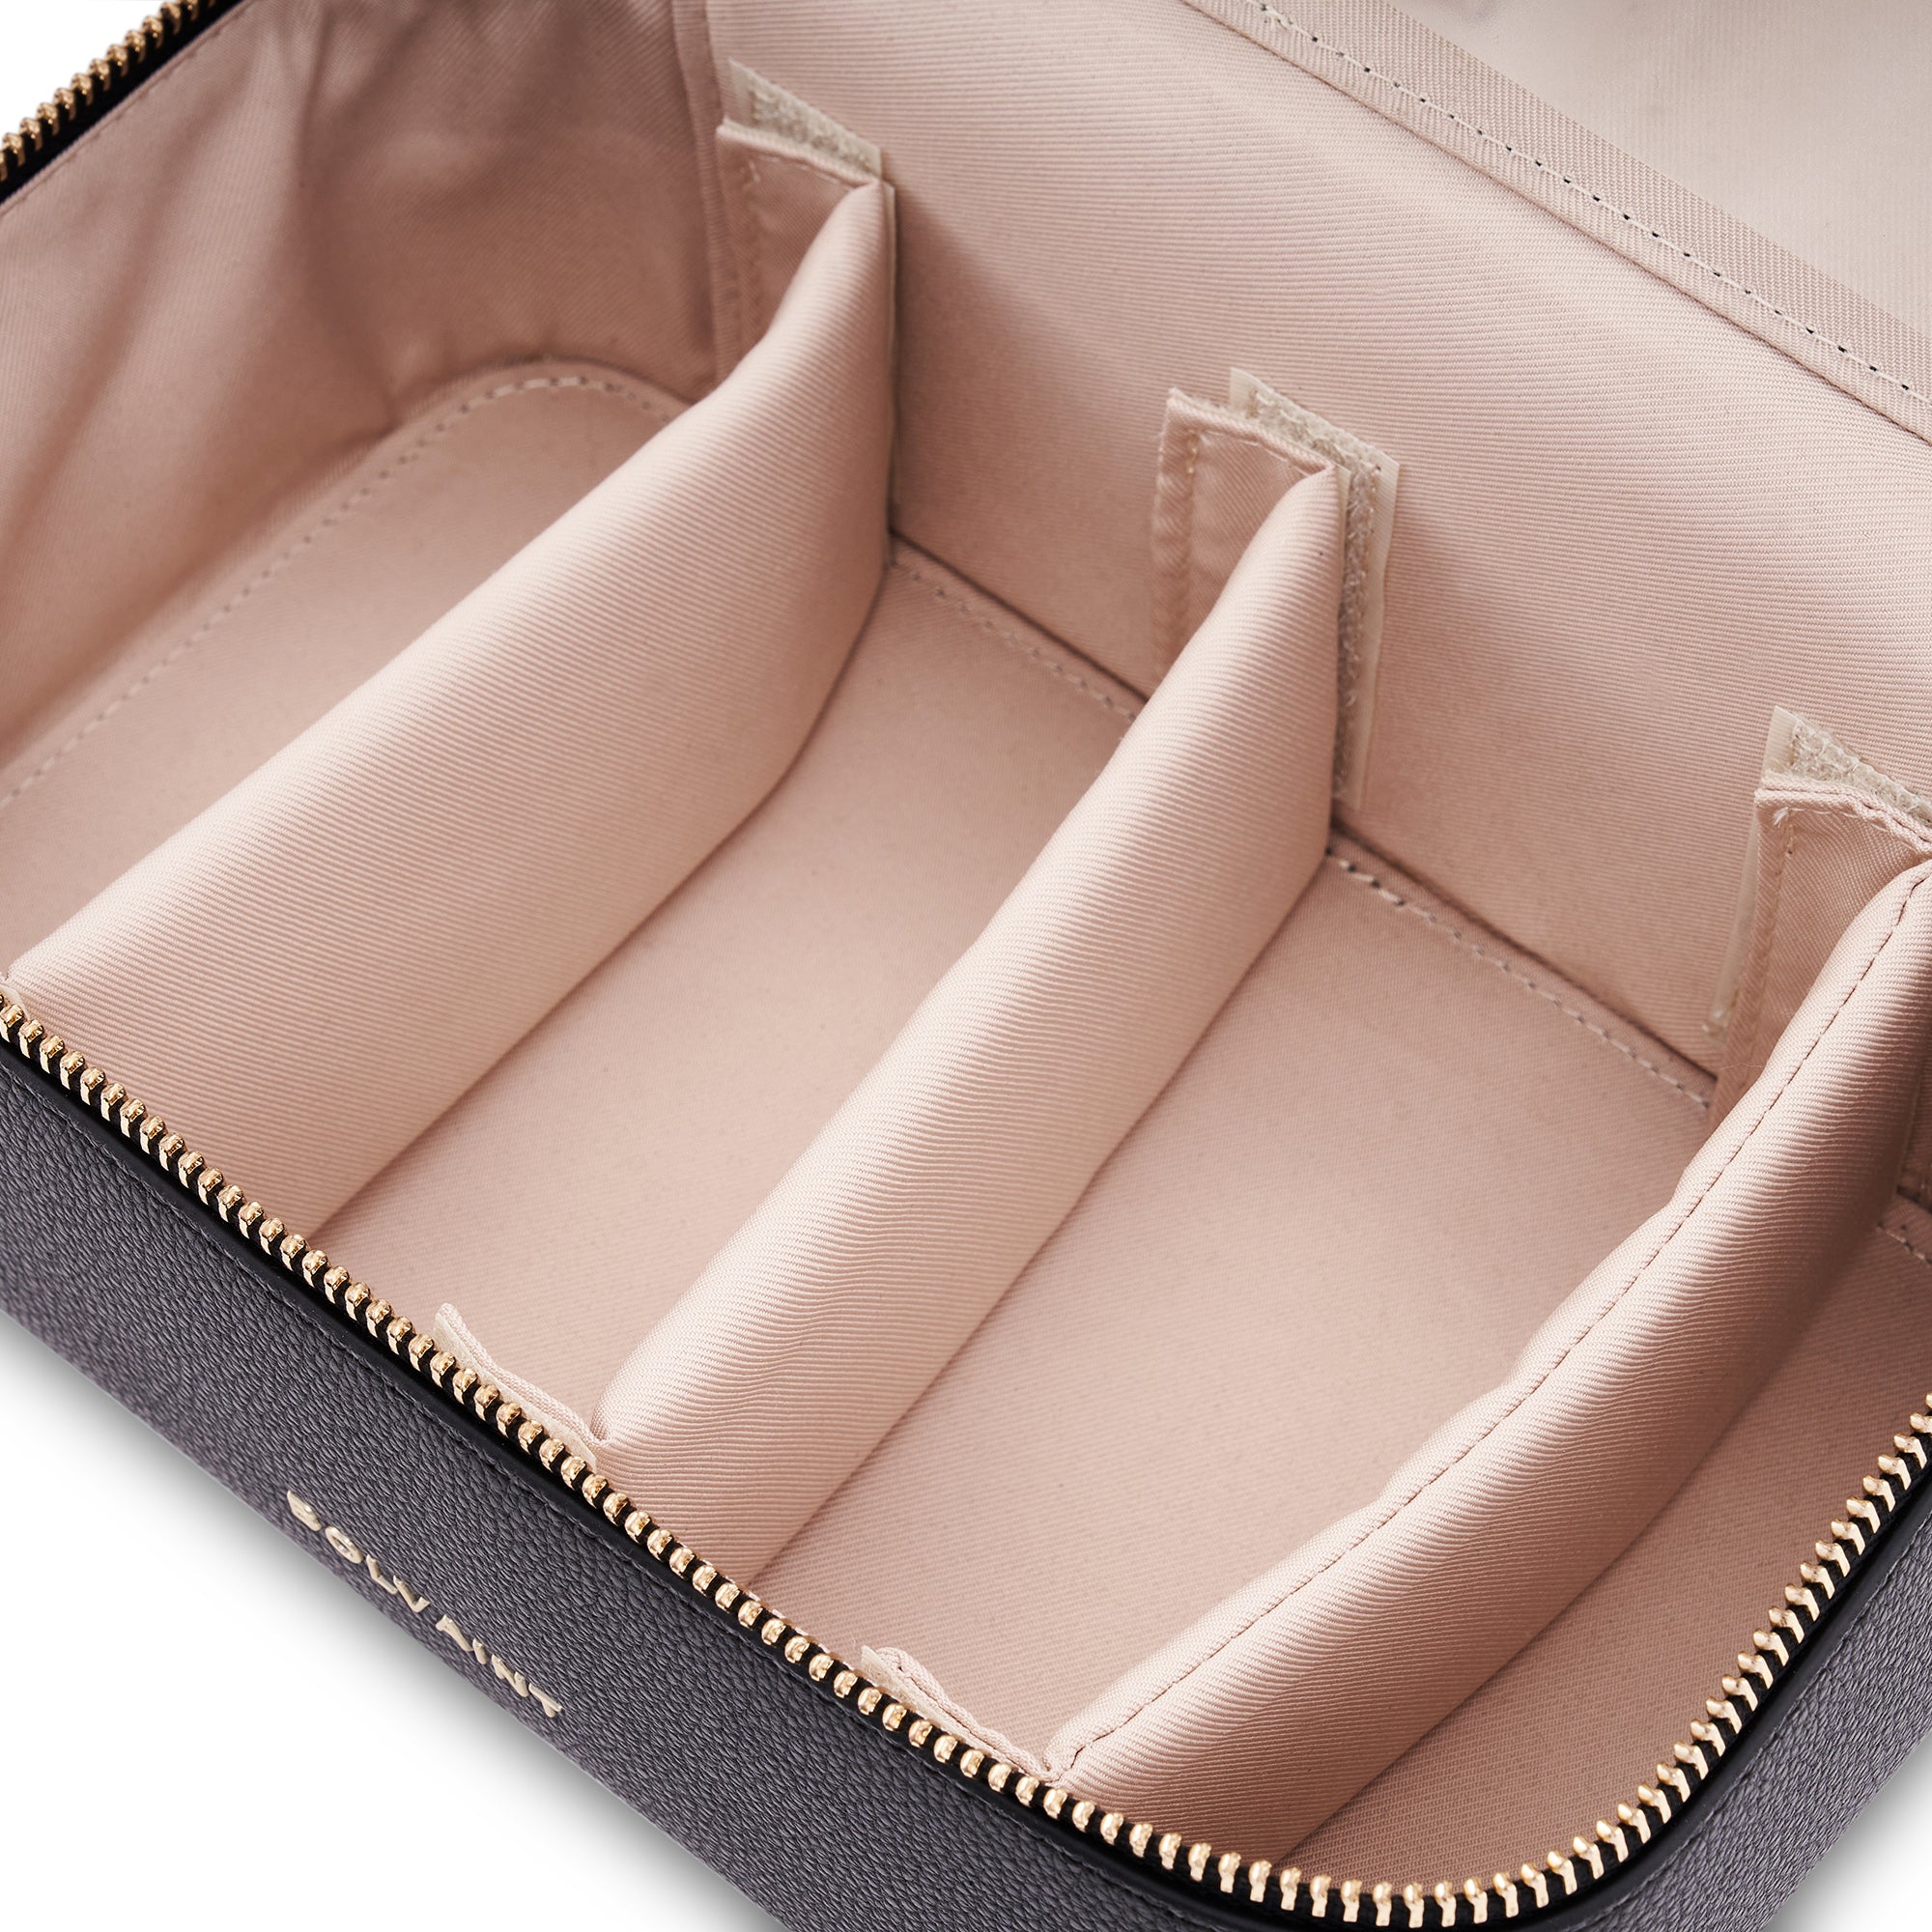 Bolvaint - The Audrey Cosmetics Bag